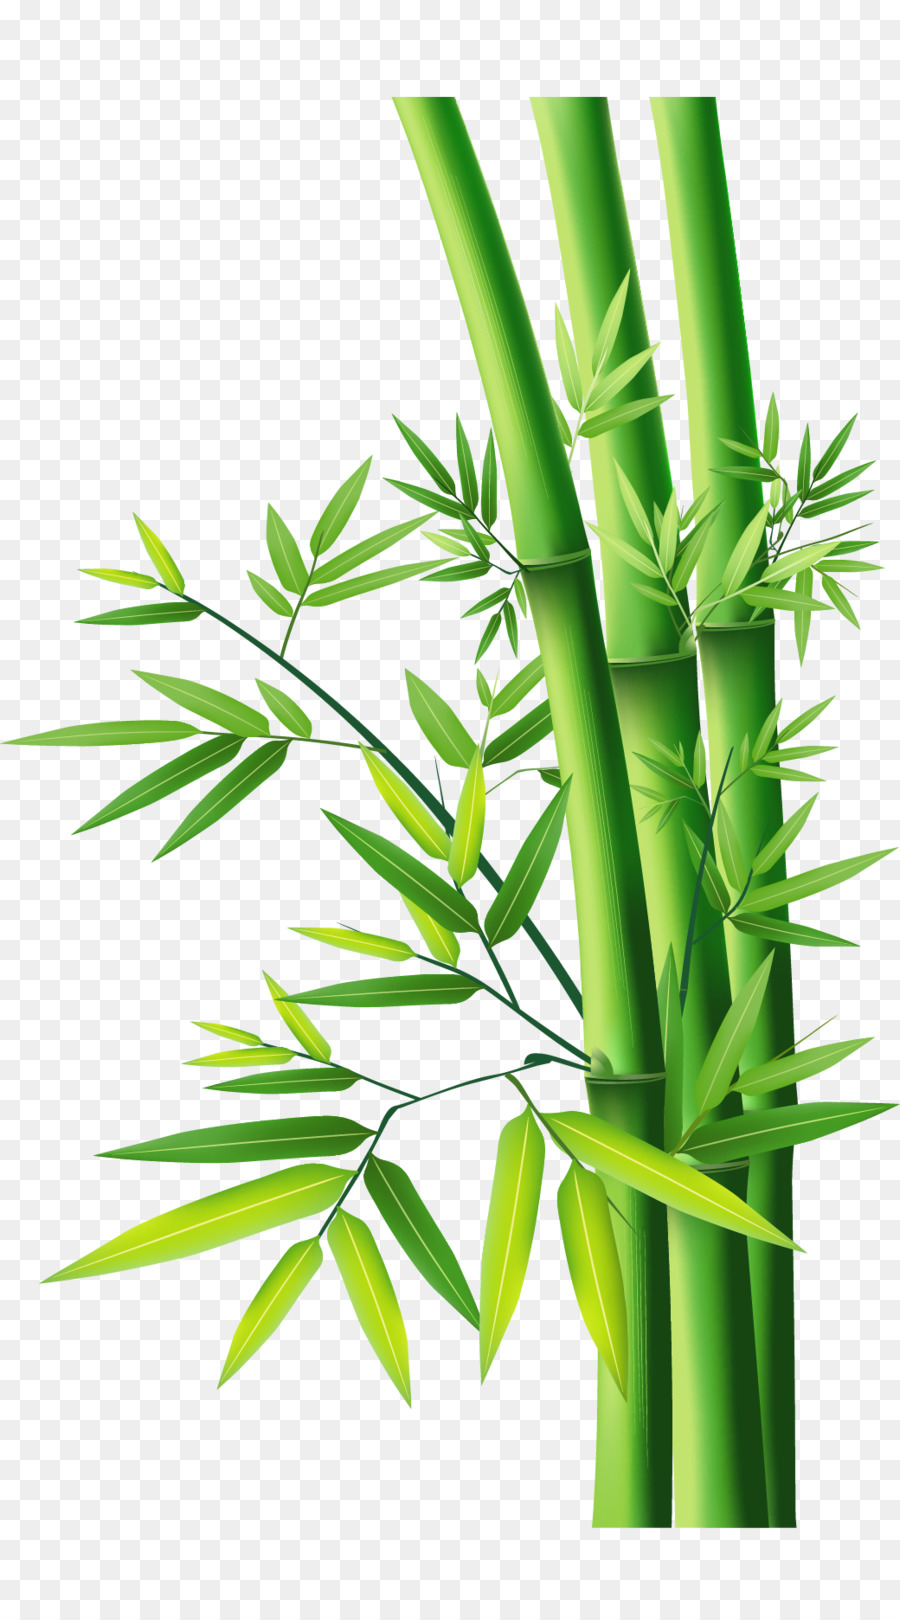 Bamboo - Bamboo Bamboo png download - 1040*1870 - Free Transparent Bamboo png Download.